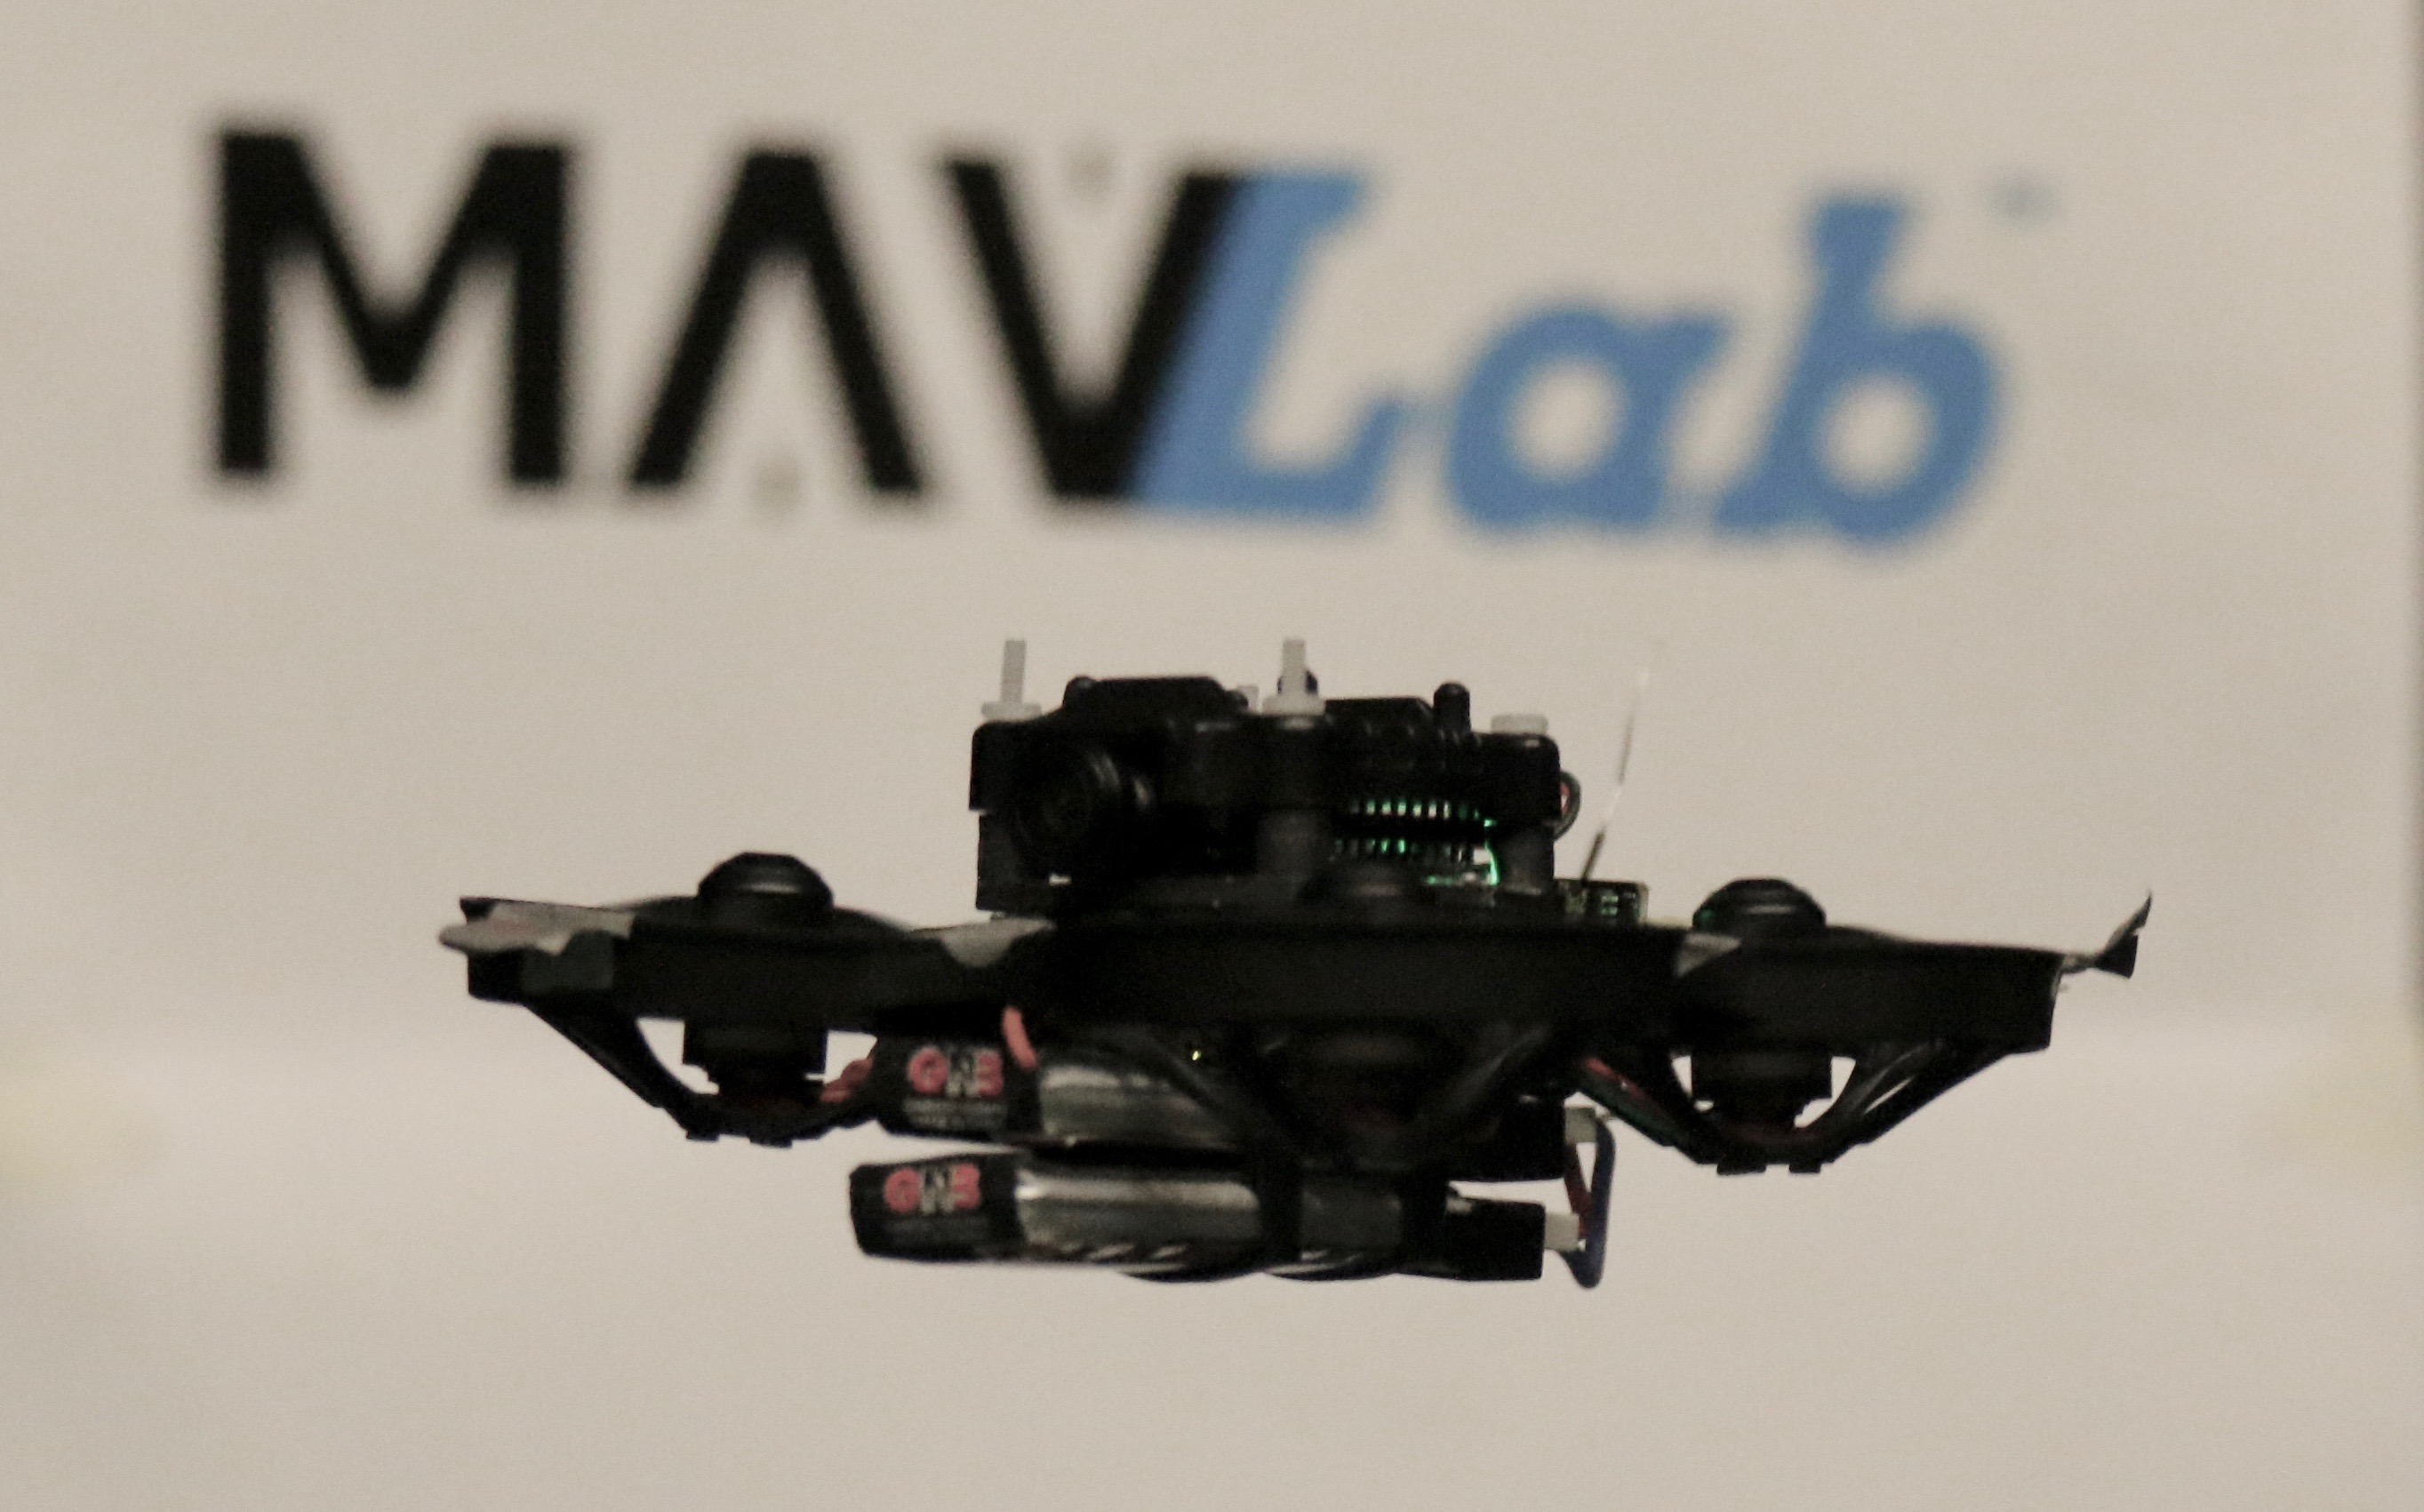 Newswise: TU Delft scientists create world’s smallest autonomous racing drone